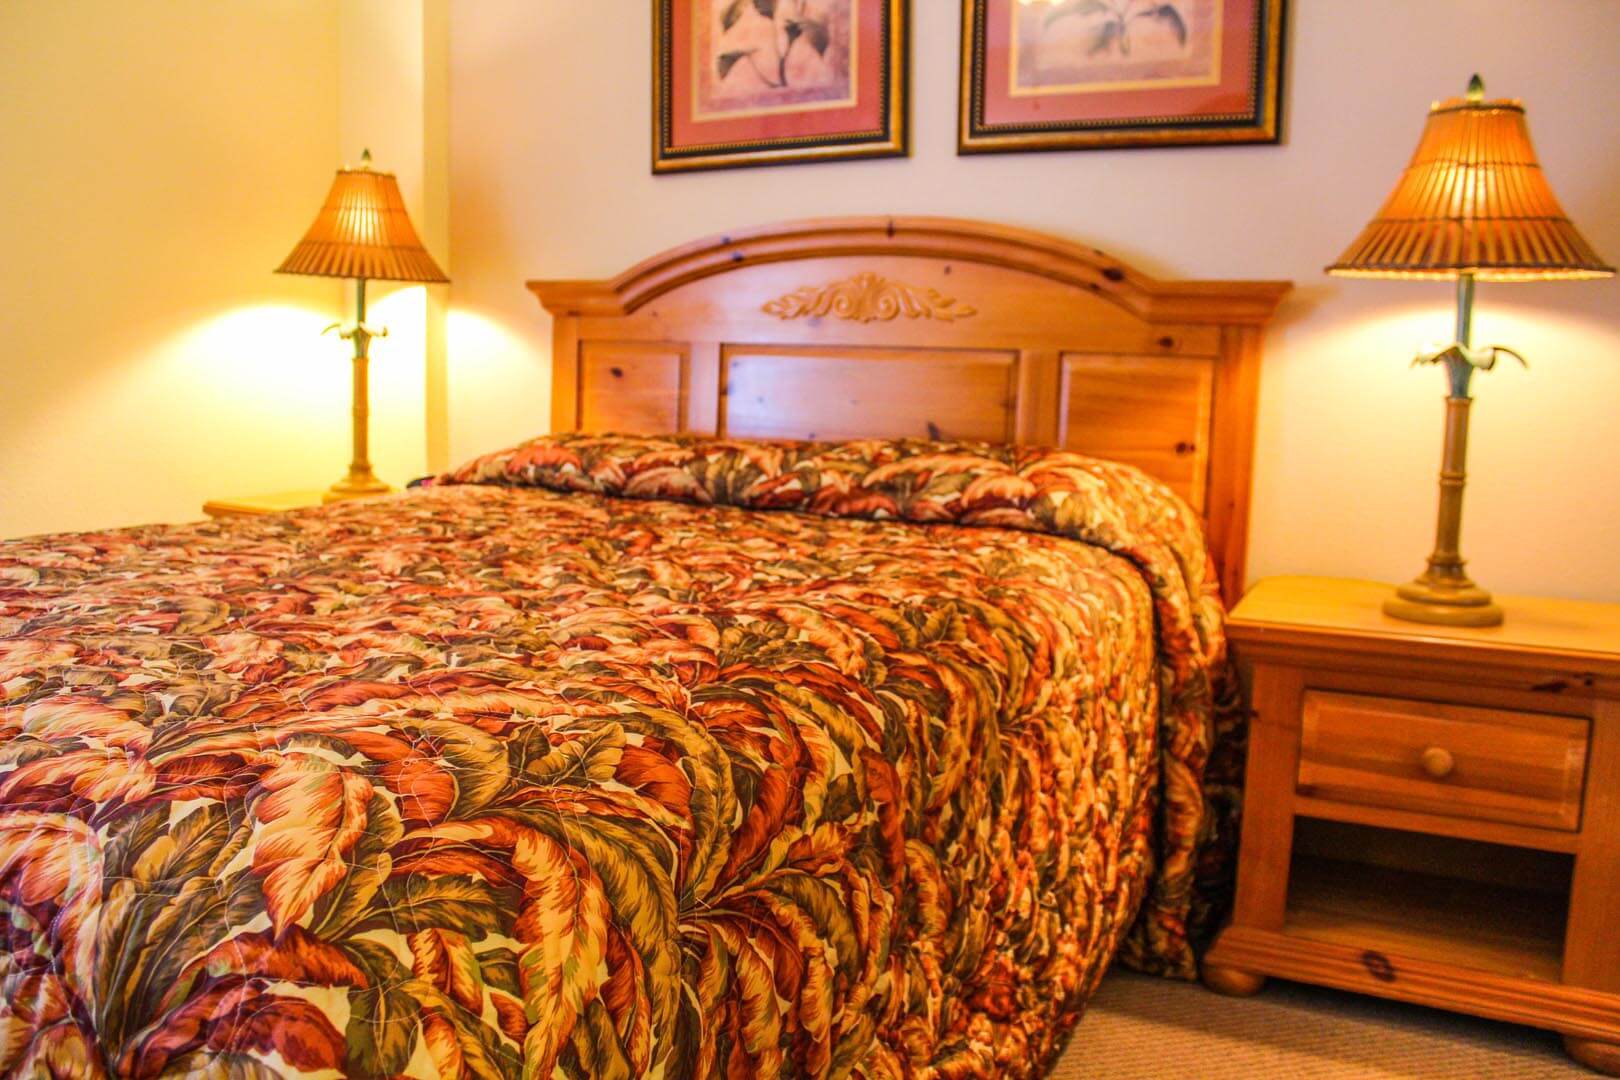 A master bedroom at VRI's Island Gulf Resort in Madeira Beach, Florida.